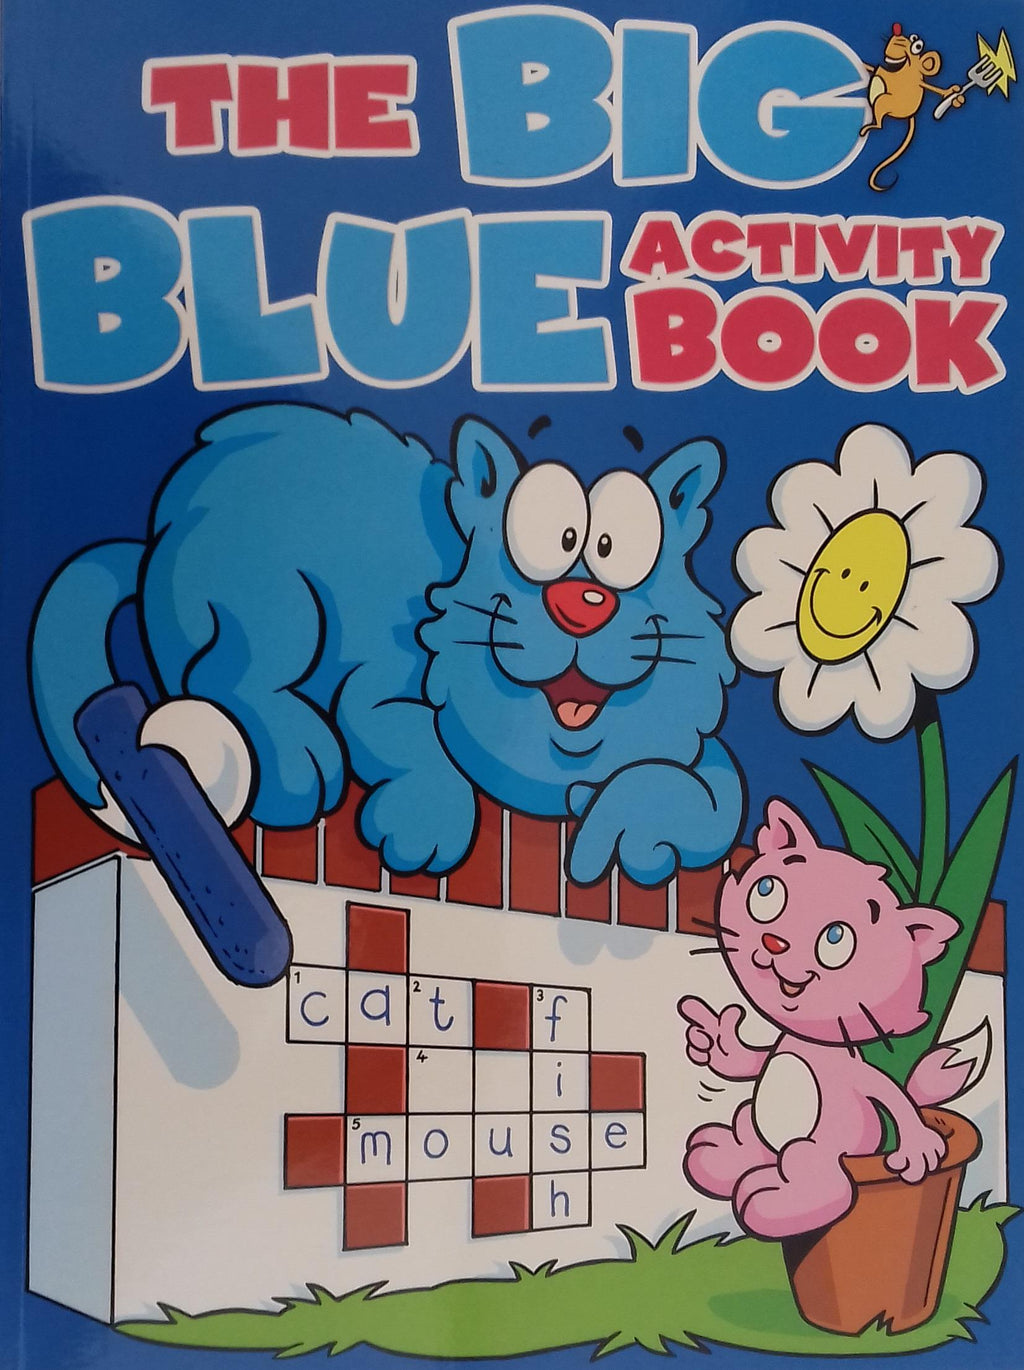 Big Blue Activity Book, The